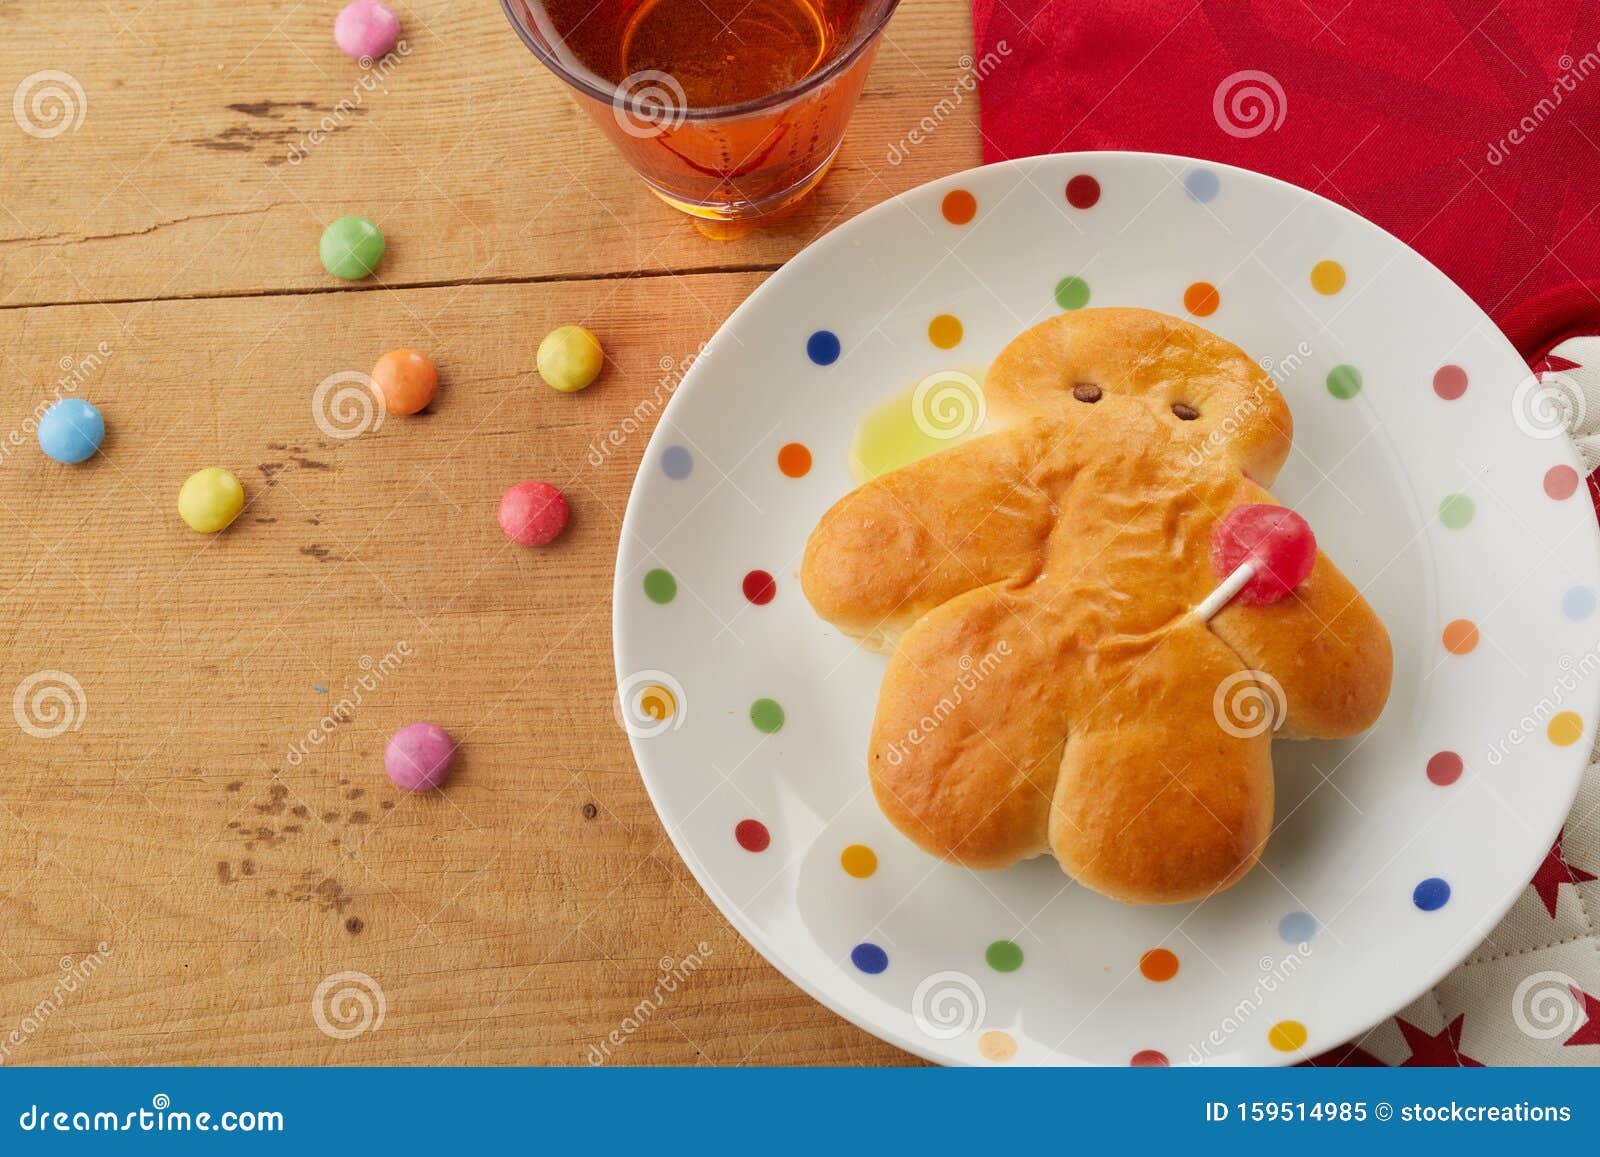 mini stuten bread man on a polka dot plate